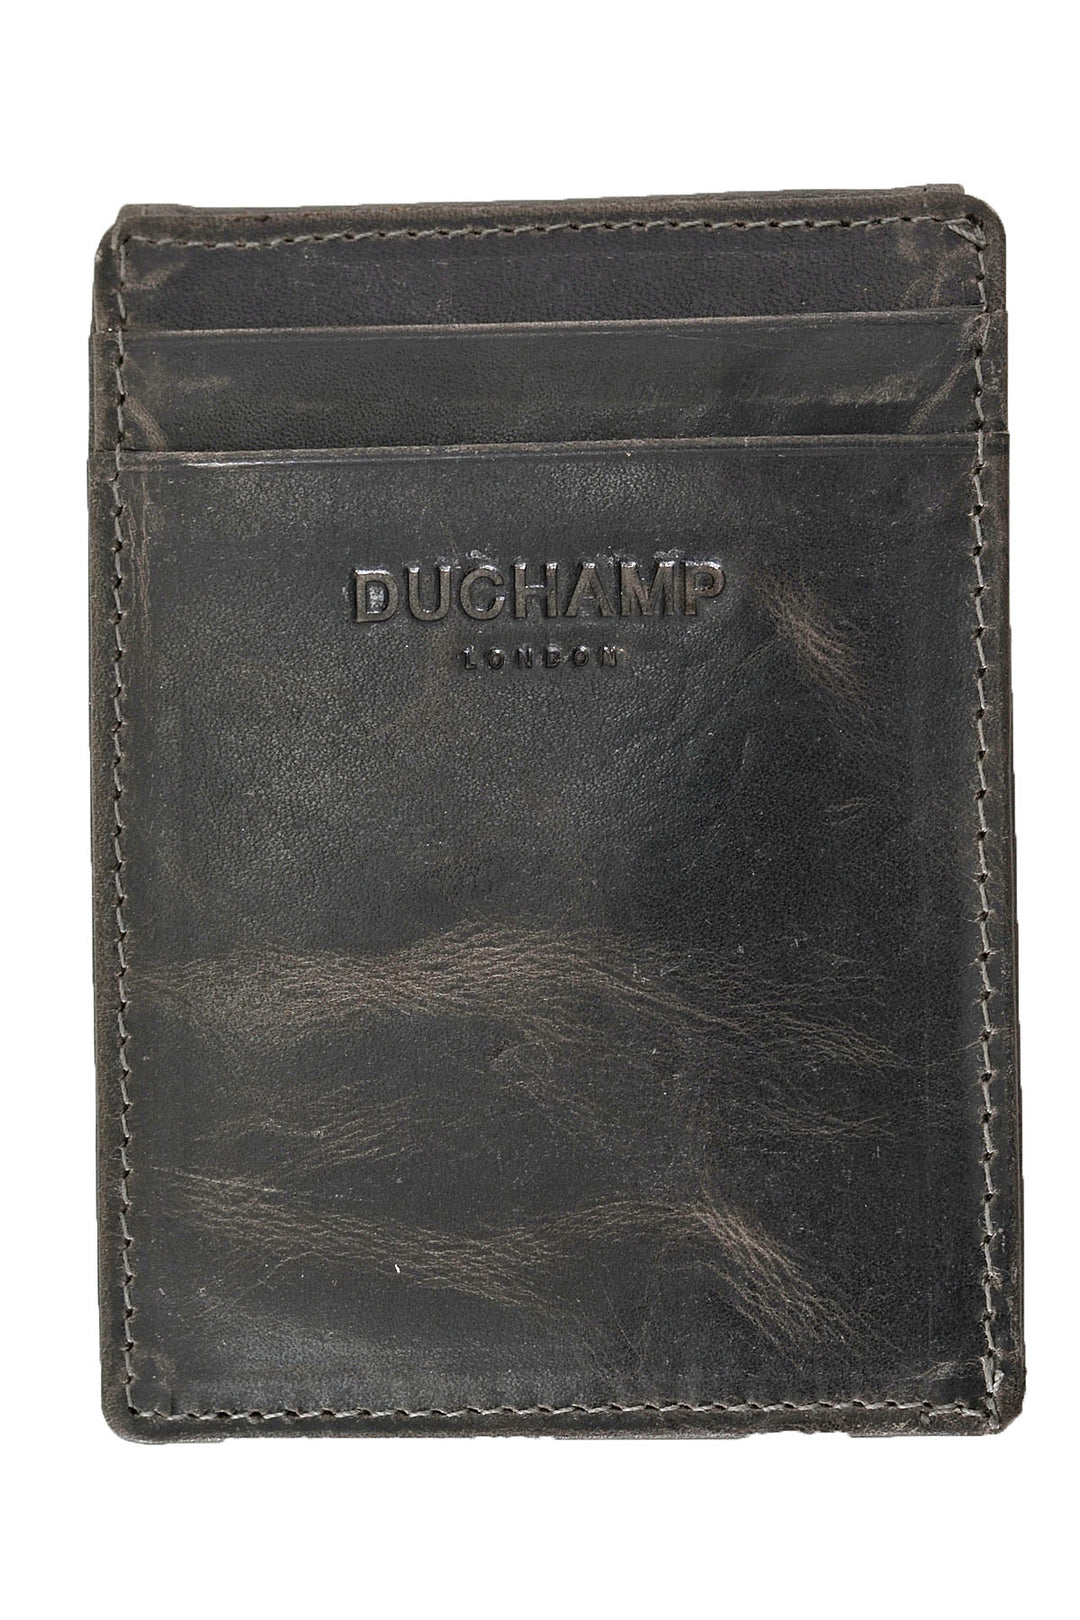 Duchamp Credit Card Wallet